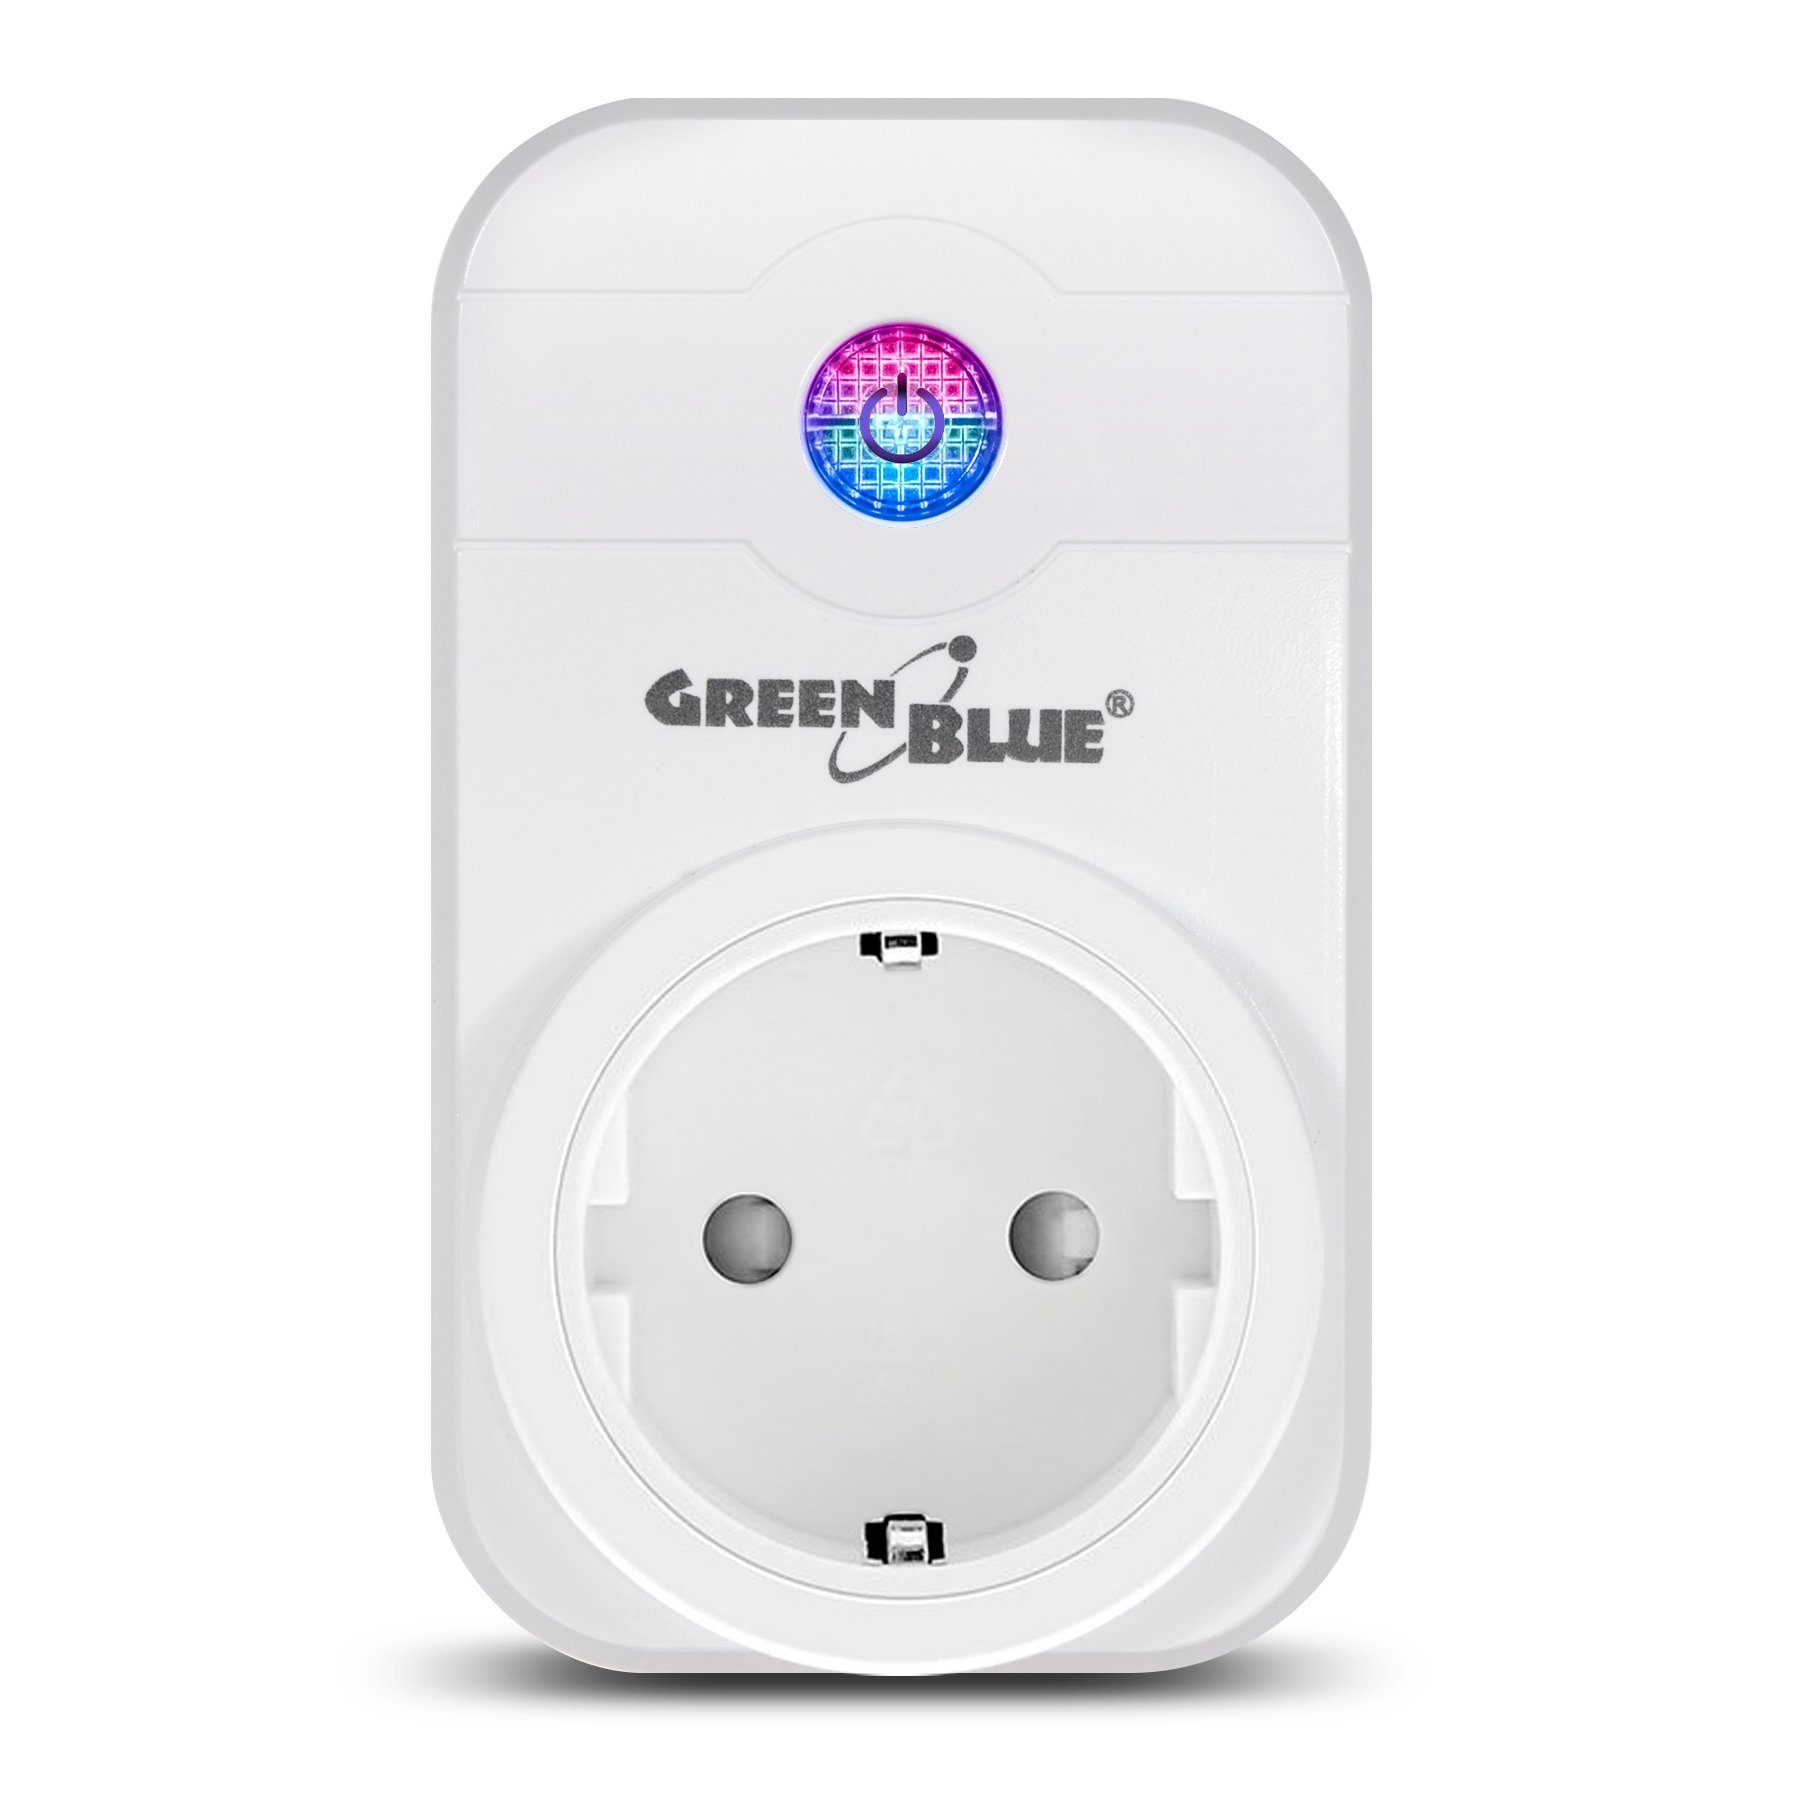 Steckdose GB155G, GreenBlue Intelligente Wi-Fi Steckdose